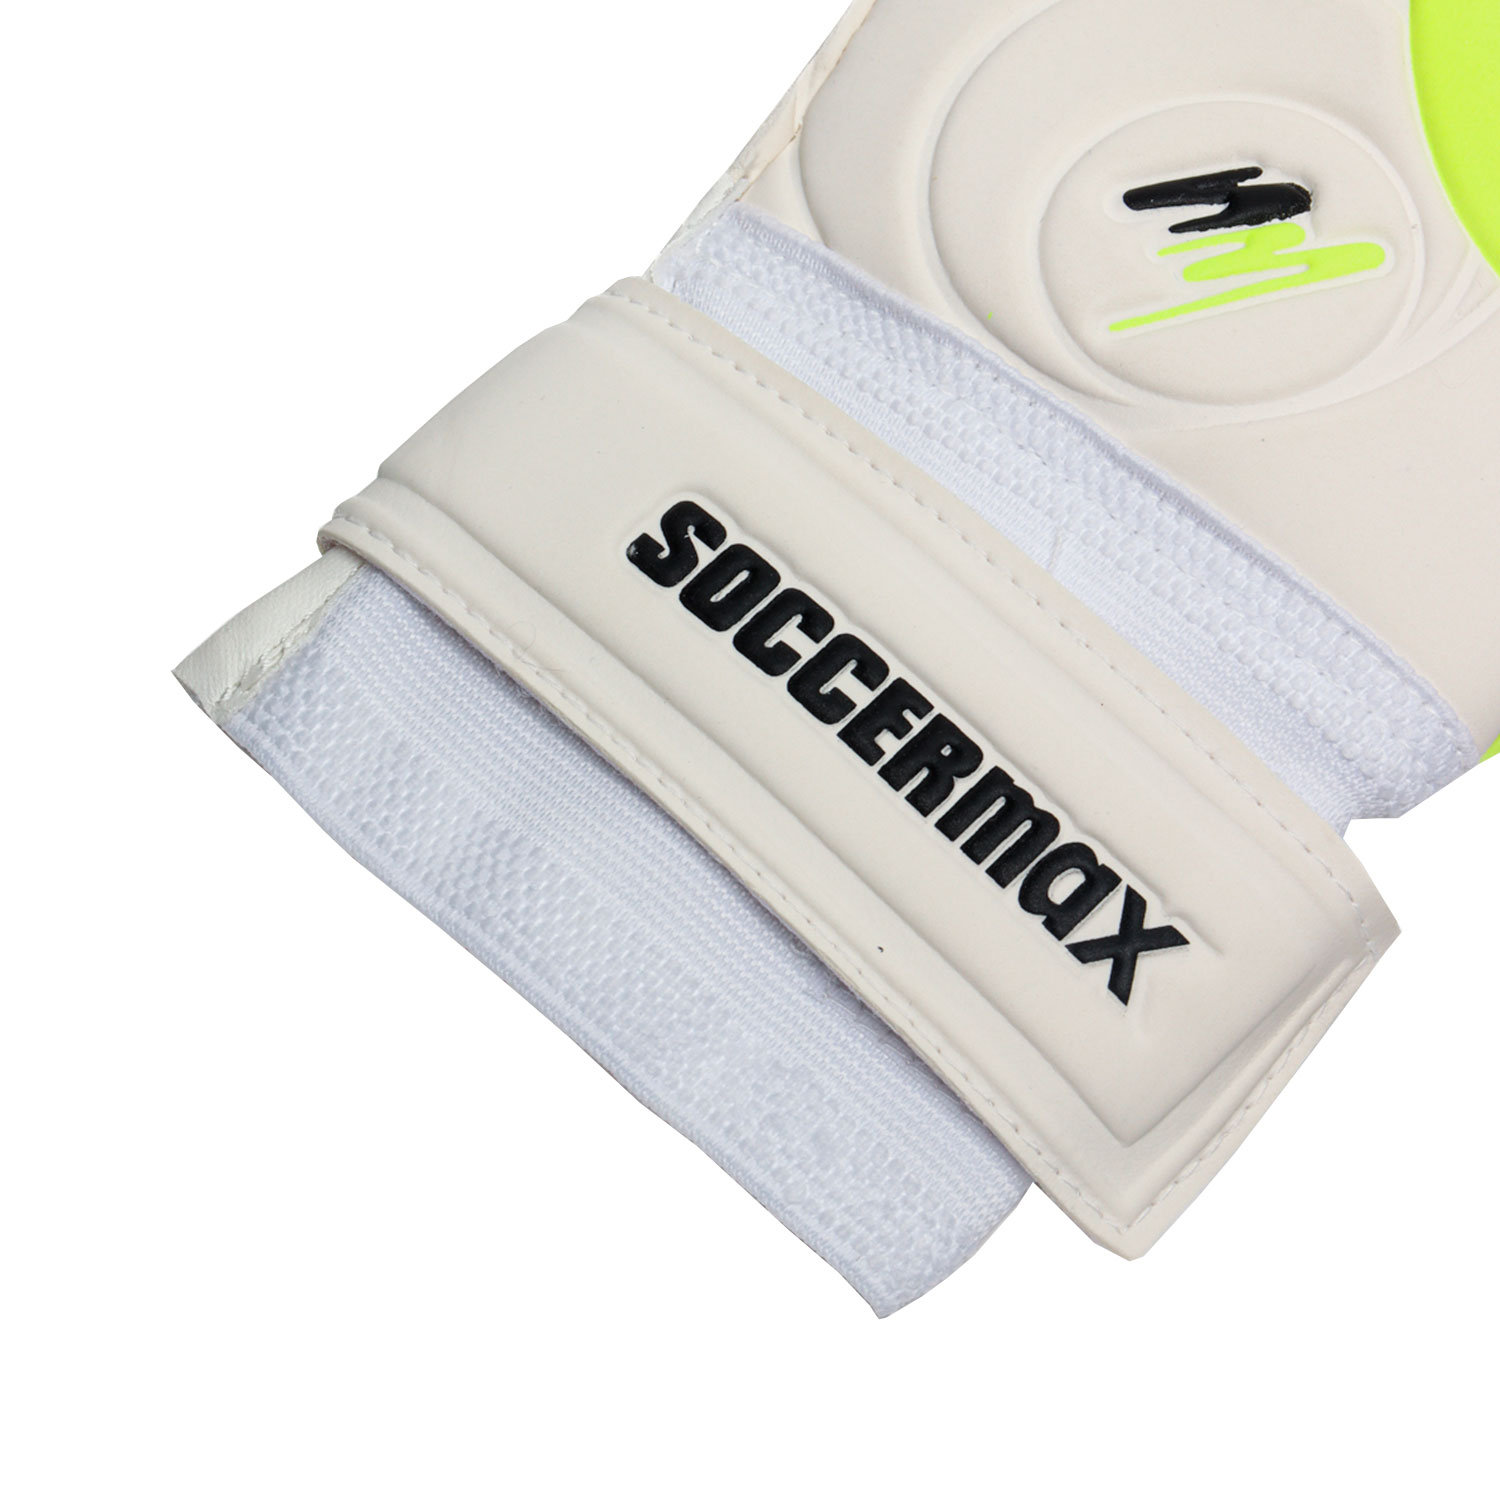 Вратарские перчатки SoccerMax